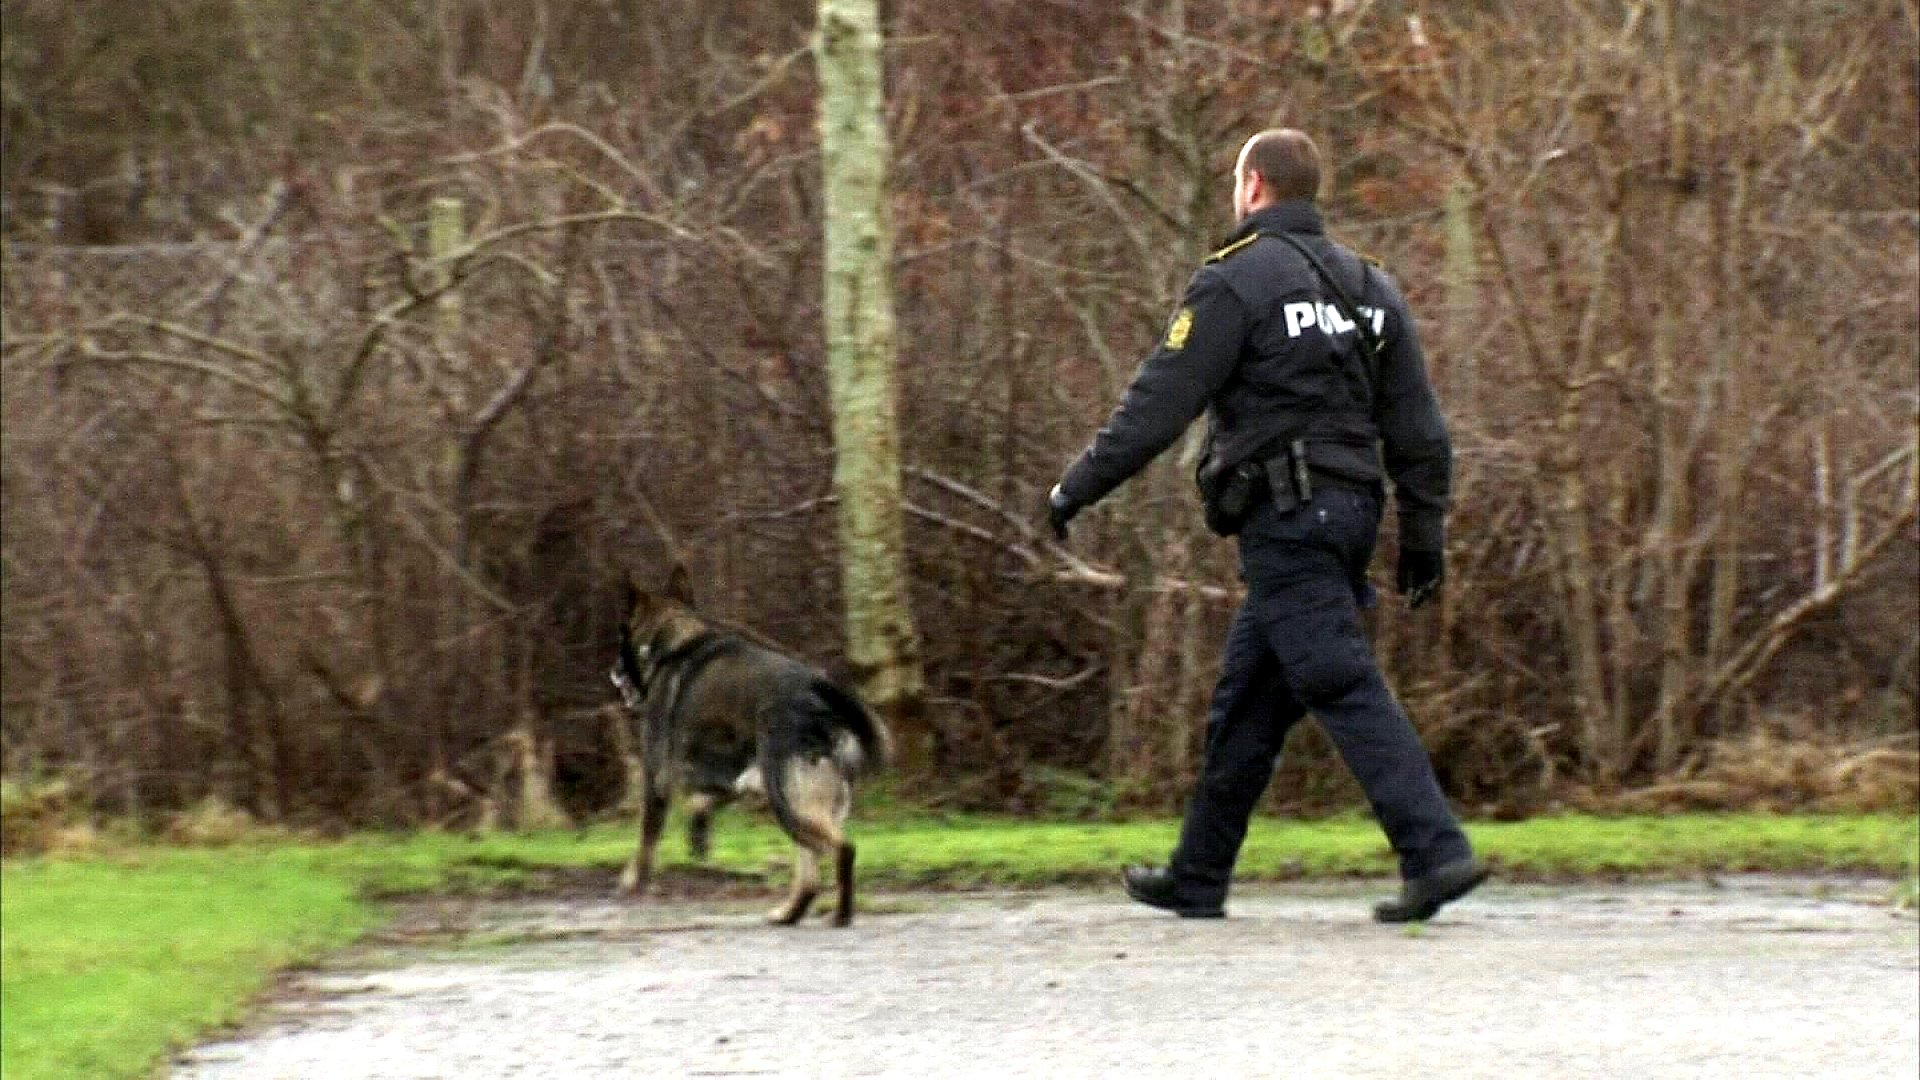 politi hunde politihund hundepatrulje politibetjent